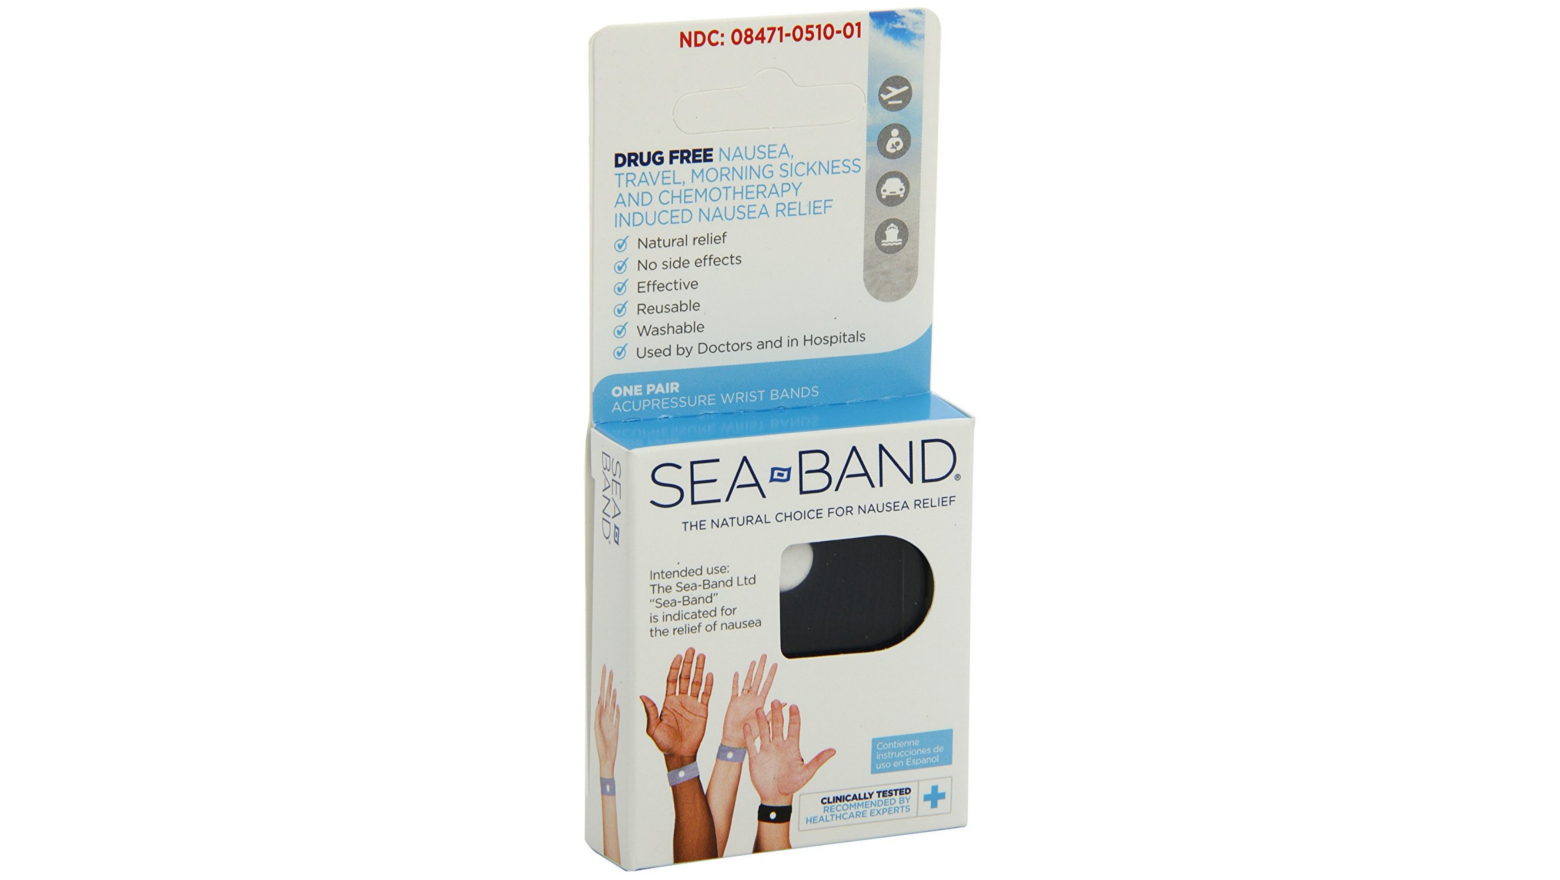 Buy Seaband for Child Travel Sickness Online at Chemist Warehouse®